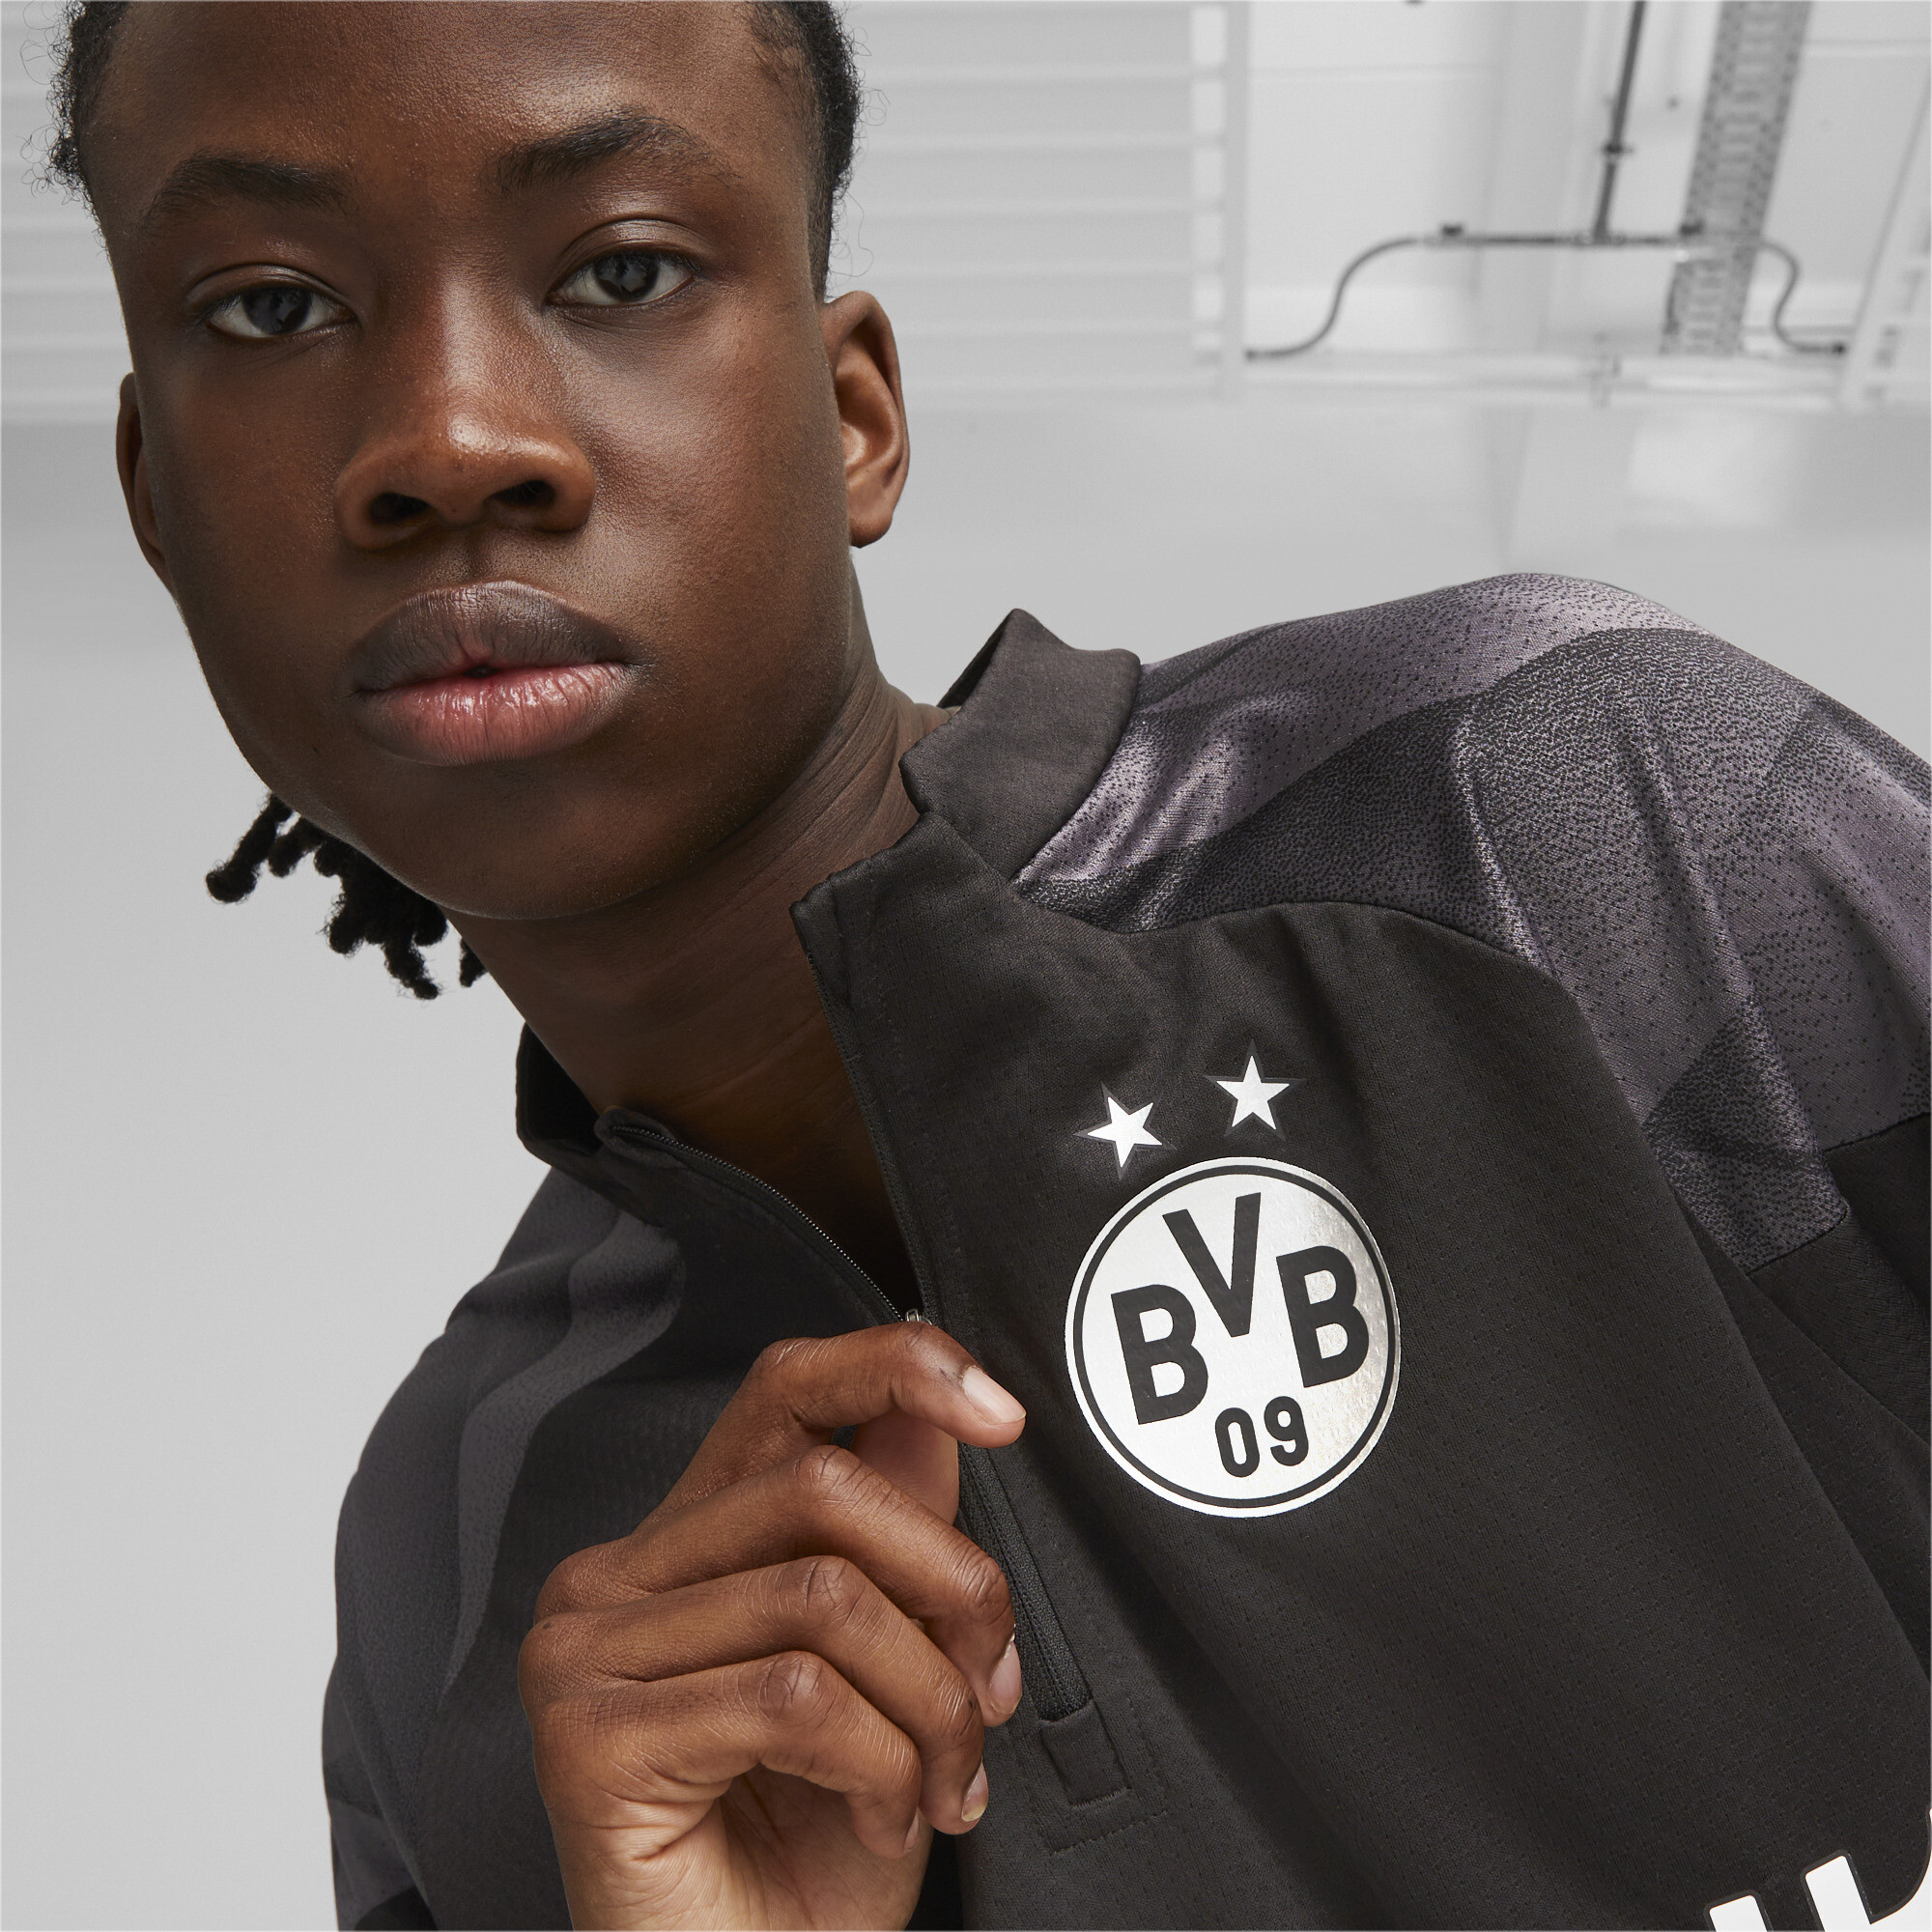 Men's Puma Borussia Dortmund Football Training Quarter-zip Top, Black Top, Size S Top, Clothing